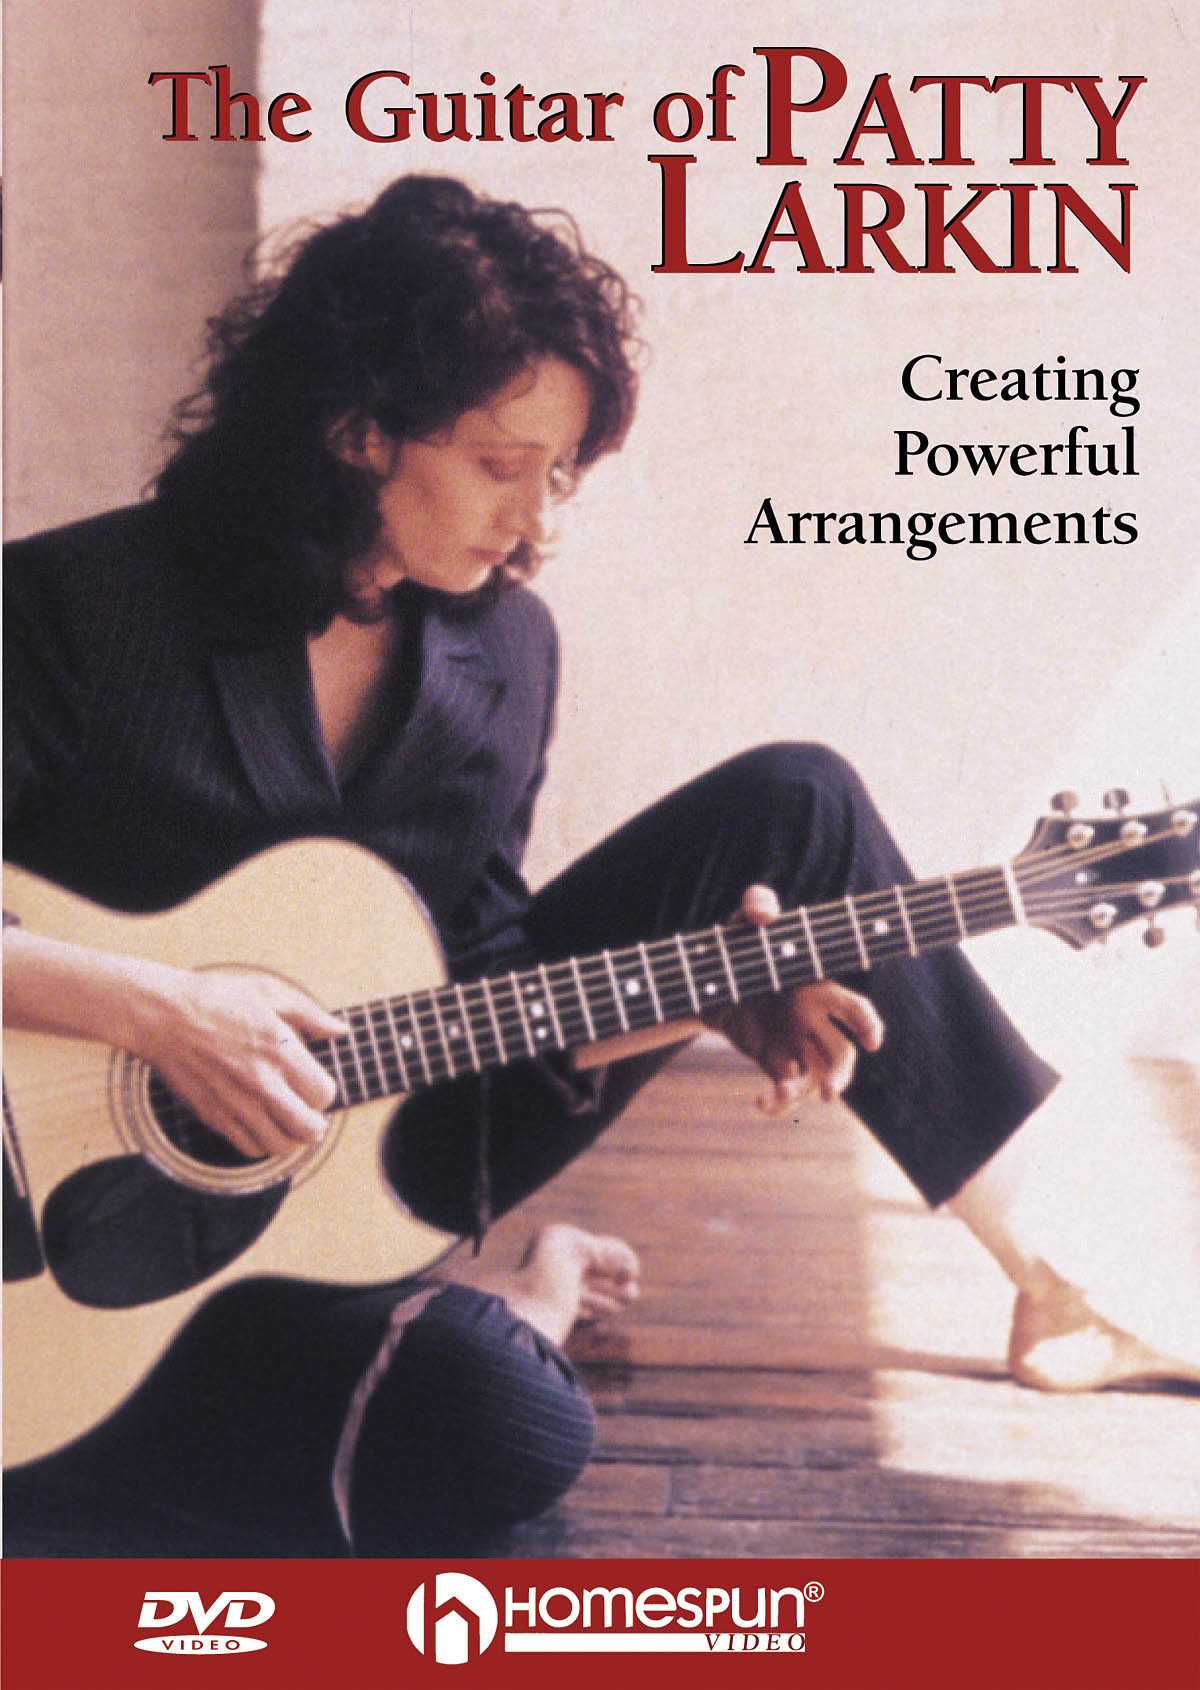 Image 1 of DVD-The Guitar of Patty Larkin - Creating Powerful Arrangements - SKU# 300-DVD267 : Product Type Media : Elderly Instruments